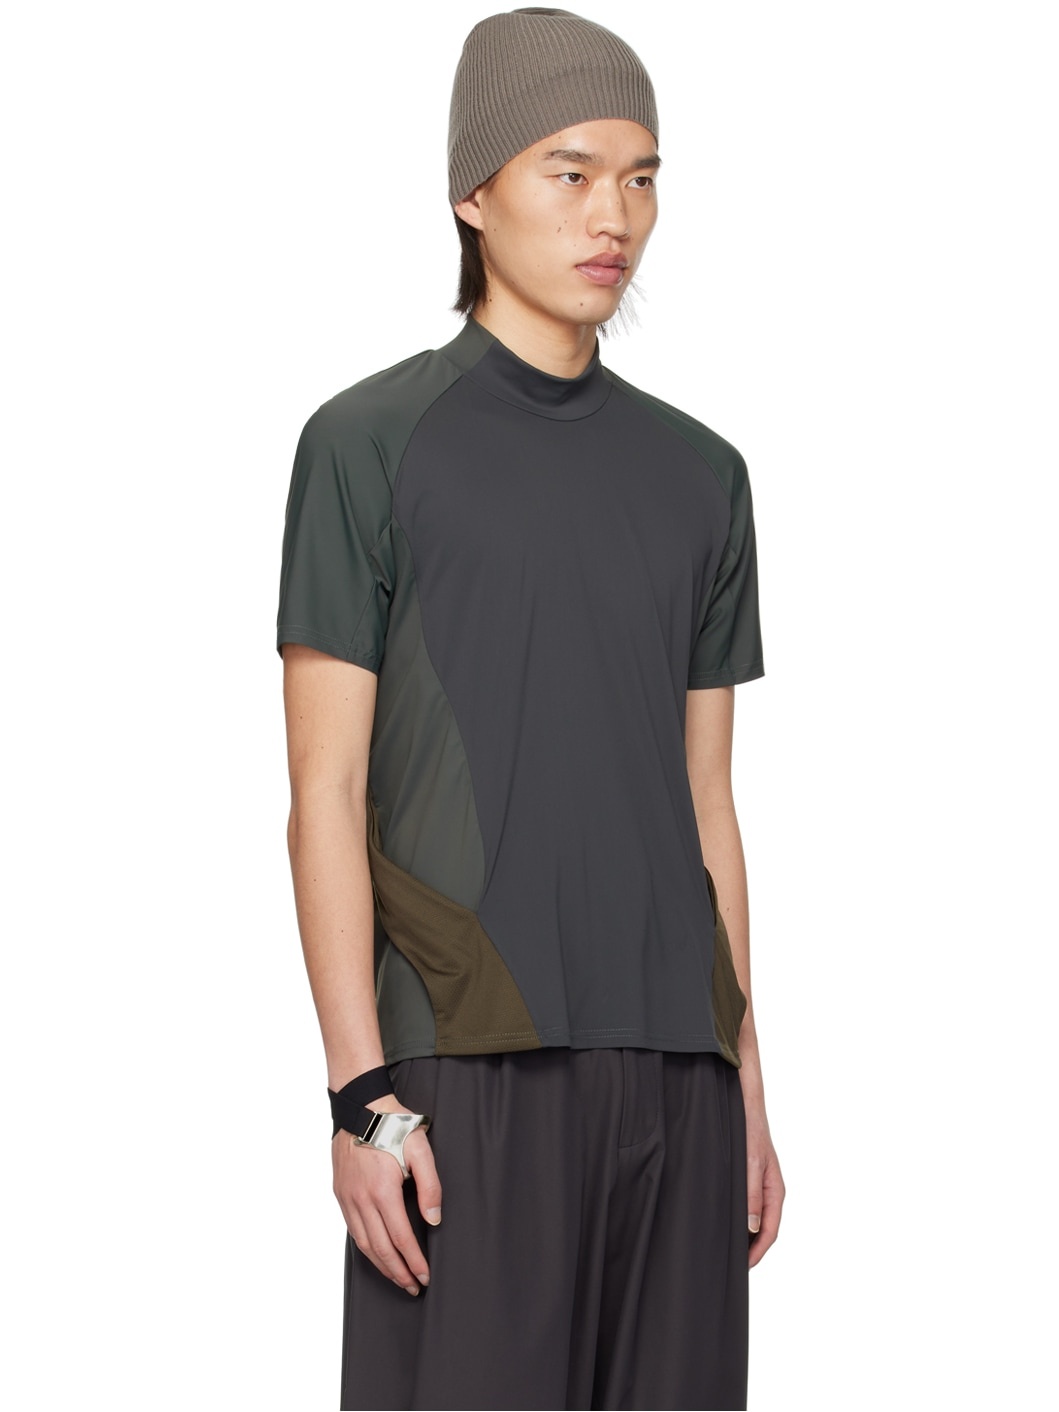 Gray Pocket T-Shirt - 2